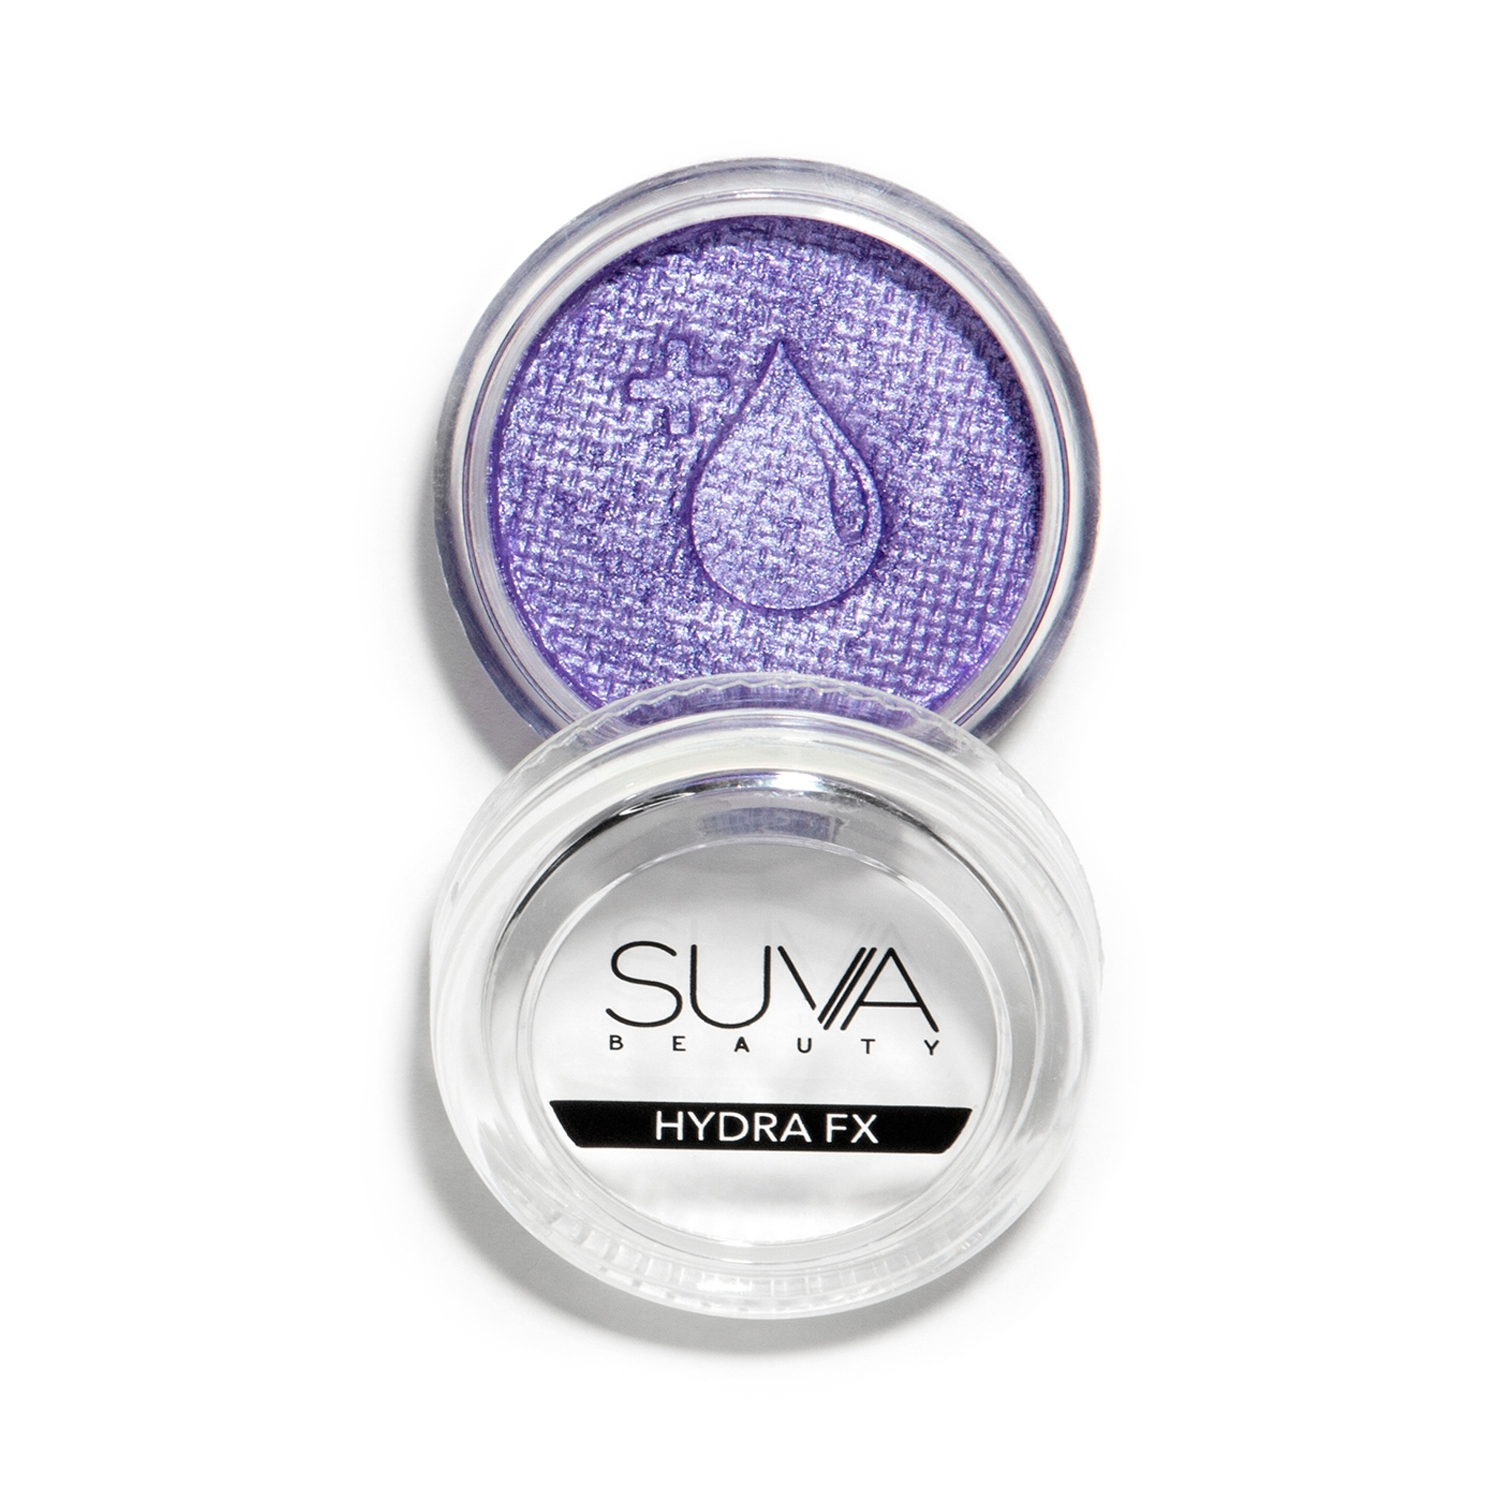 SUVA Beauty Hydra FX Eyeliner - Lustre Lilac (10g)